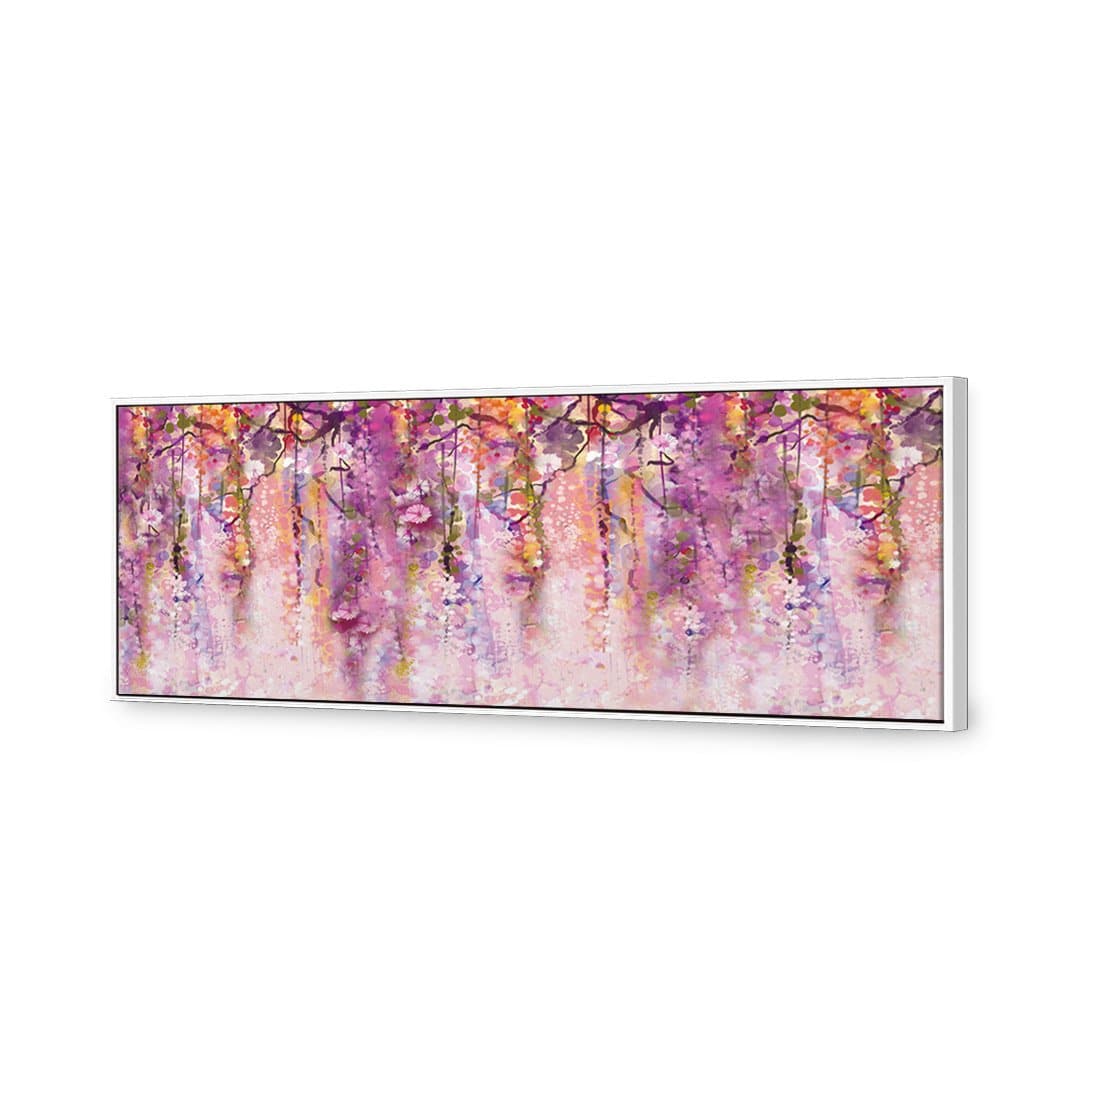 Lilac Dream (Long) Canvas Art-Canvas-Wall Art Designs-60x20cm-Canvas - White Frame-Wall Art Designs